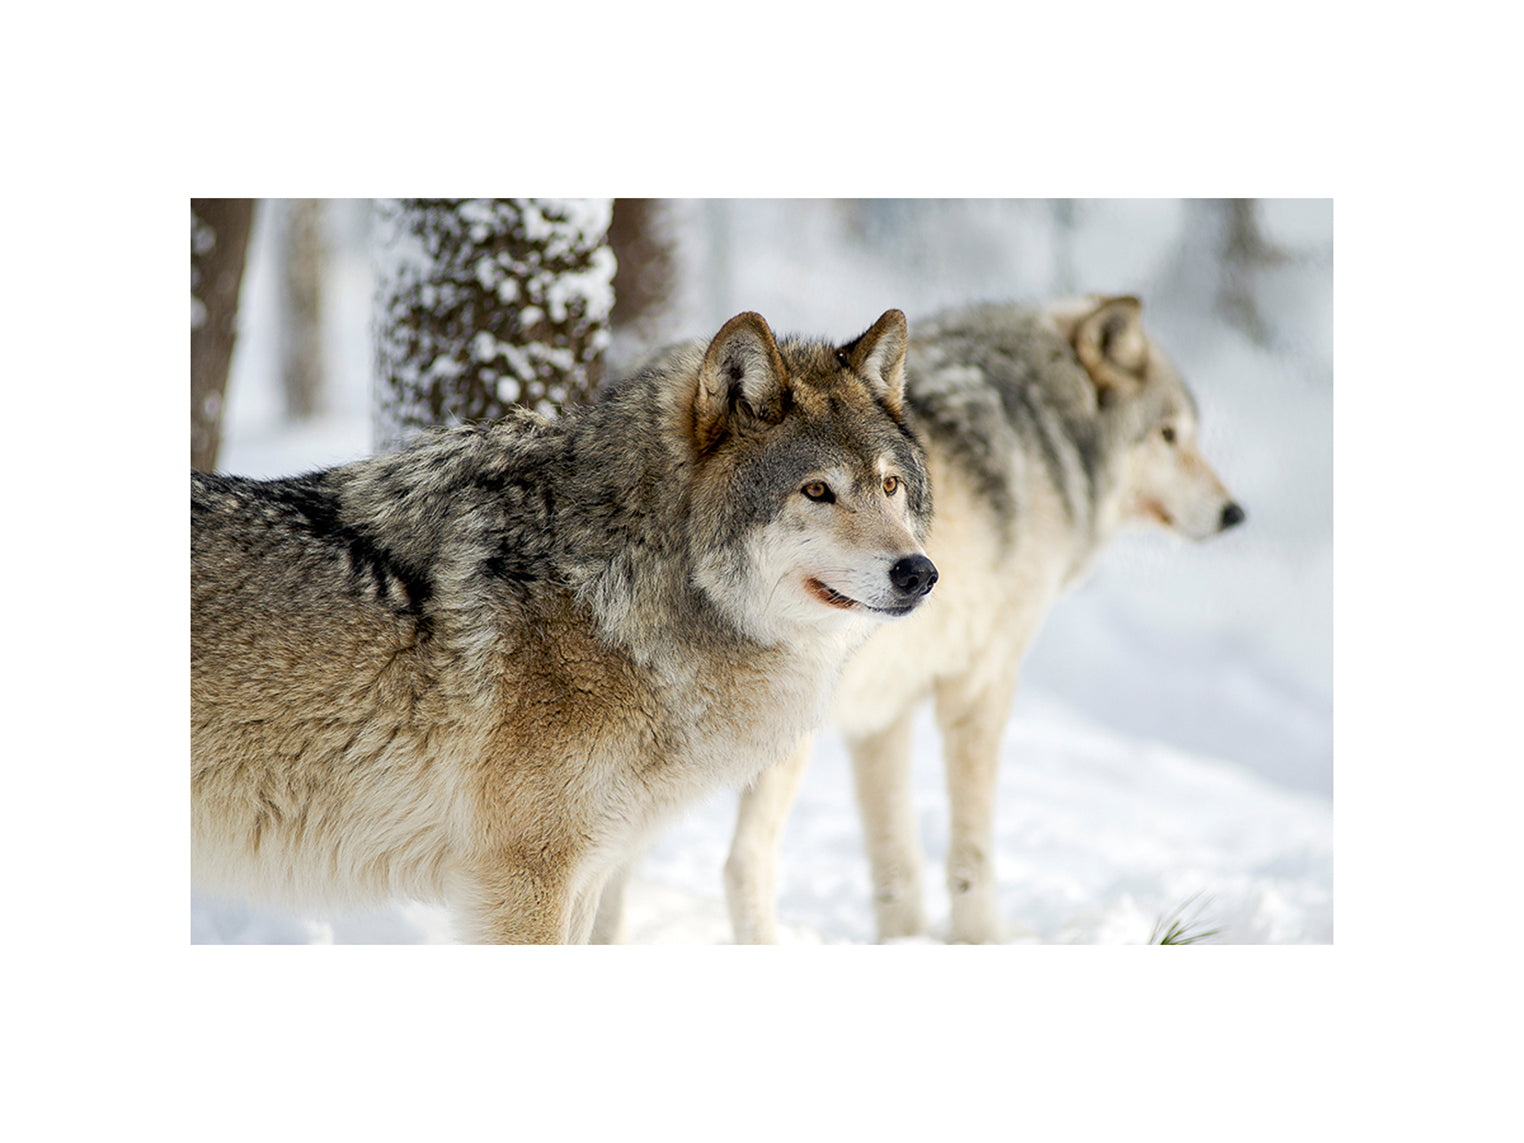 Wolf couple